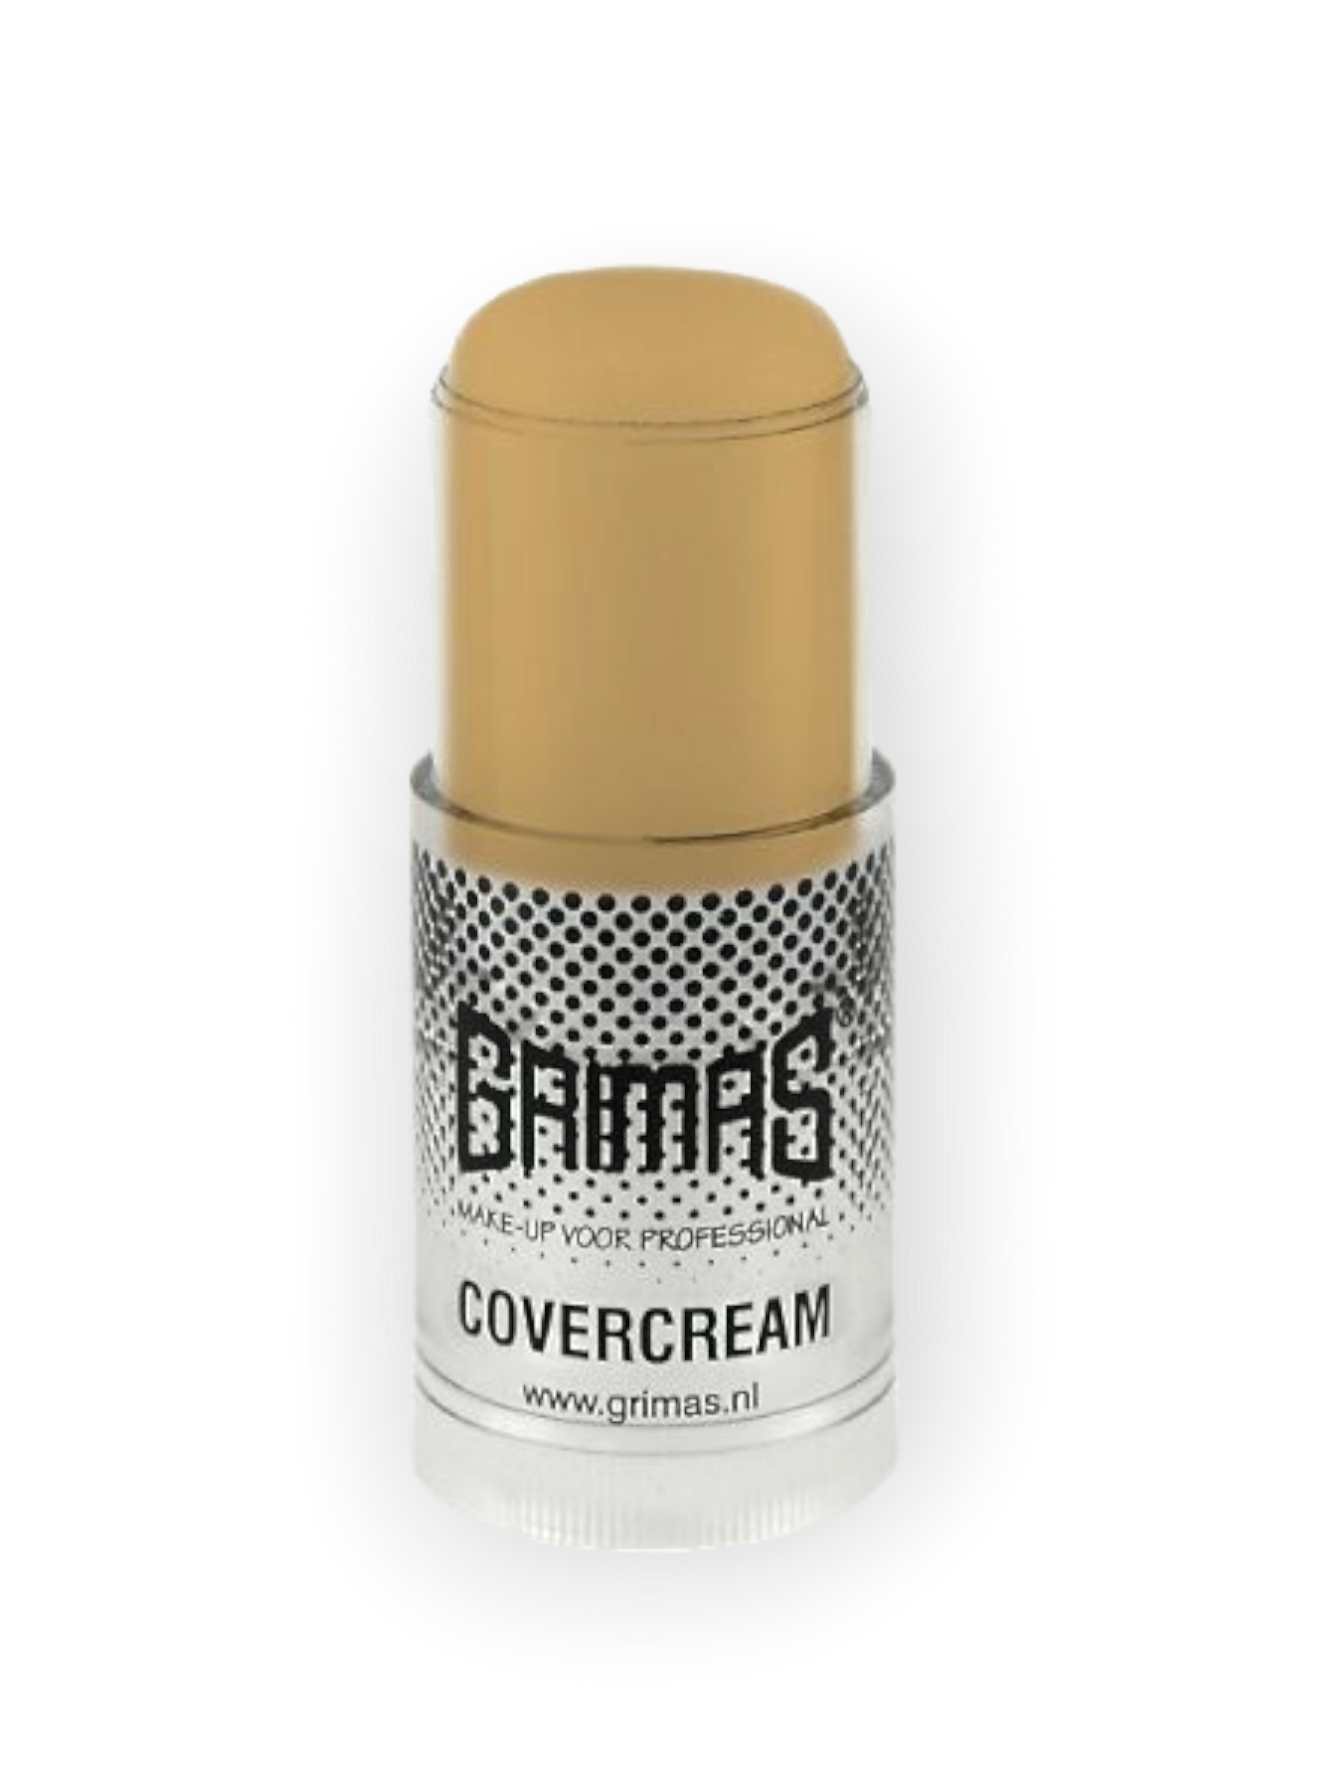 GRIMAS Cover Cream meikkivoidepuikko J3